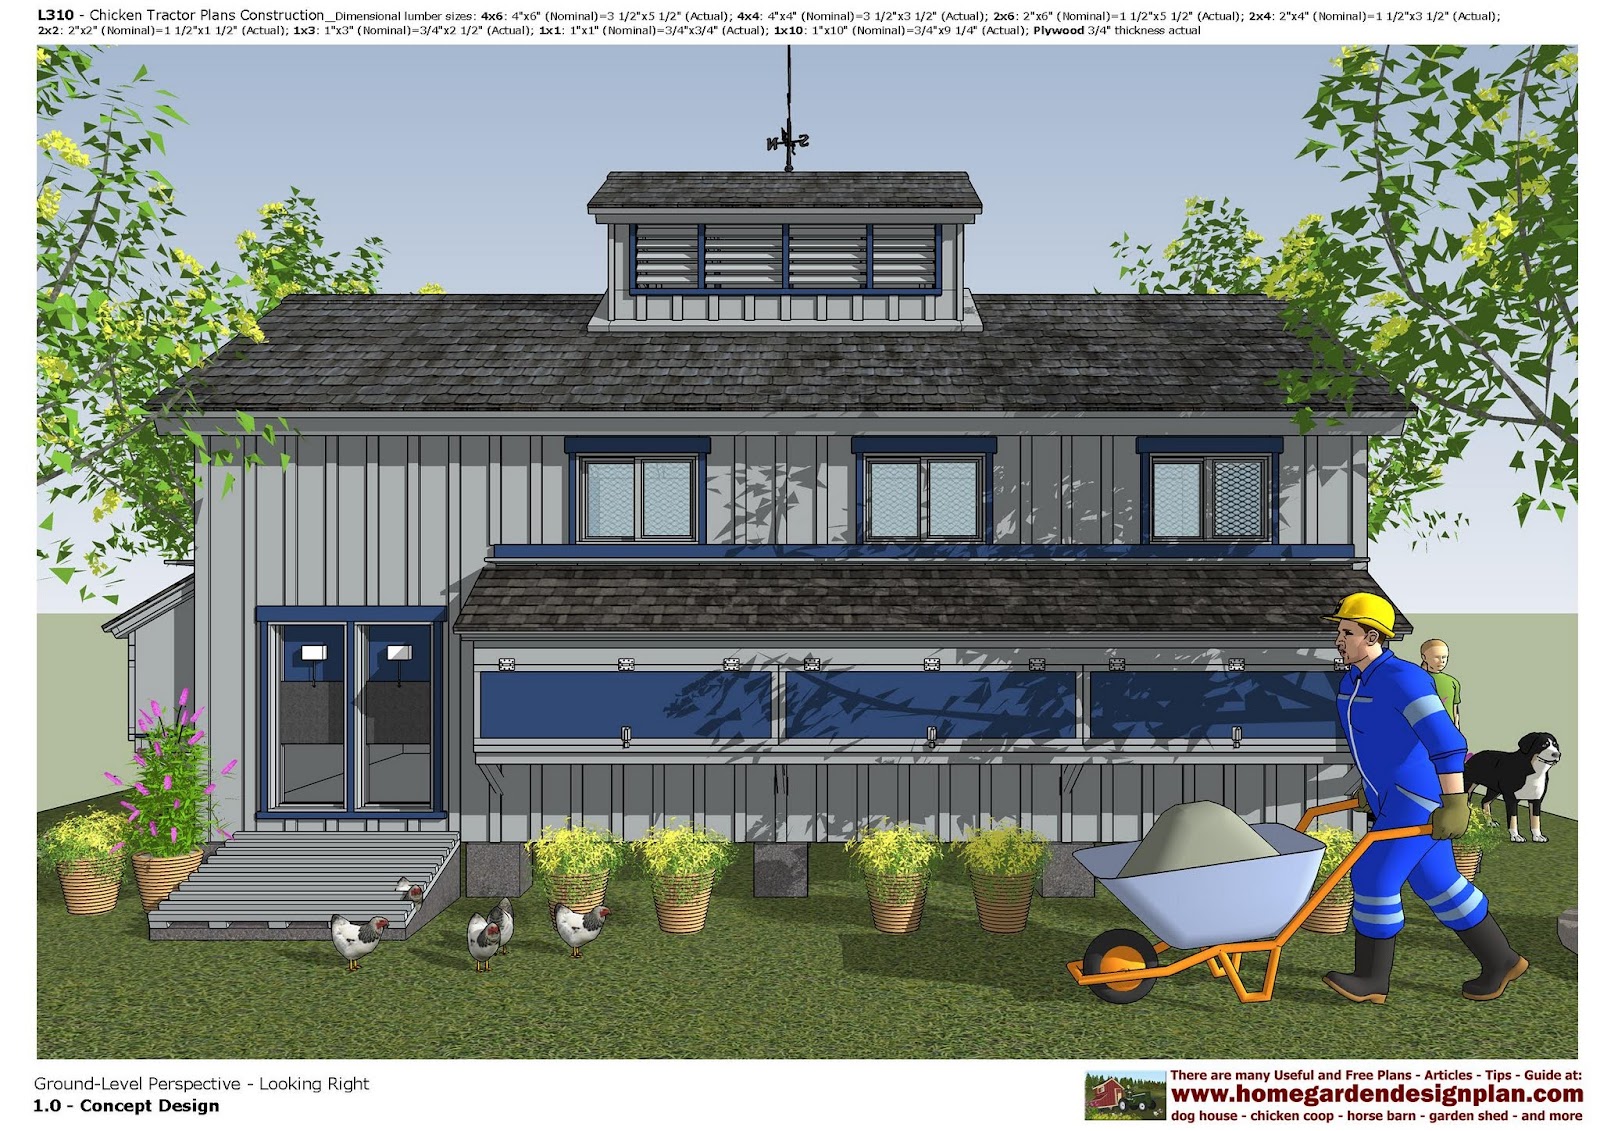 home garden plans: L310 - Chicken Coop Plans Construction 